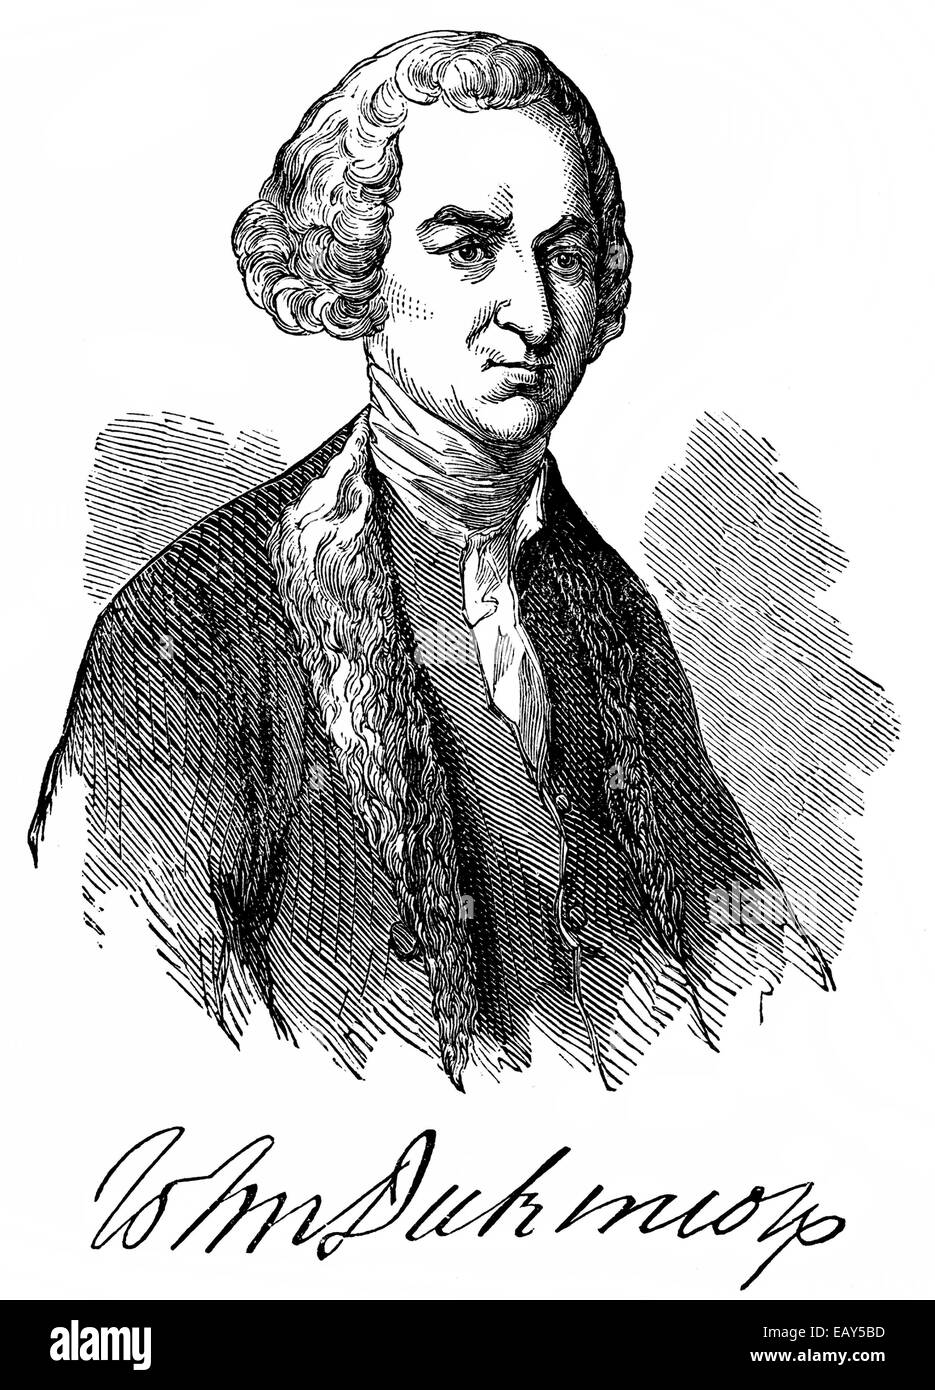 John Dickinson, 1732 - 1808, a politician and Founding Father of the United States, Portrait von John Dickinson, 1732 - 1808, ei Stock Photo